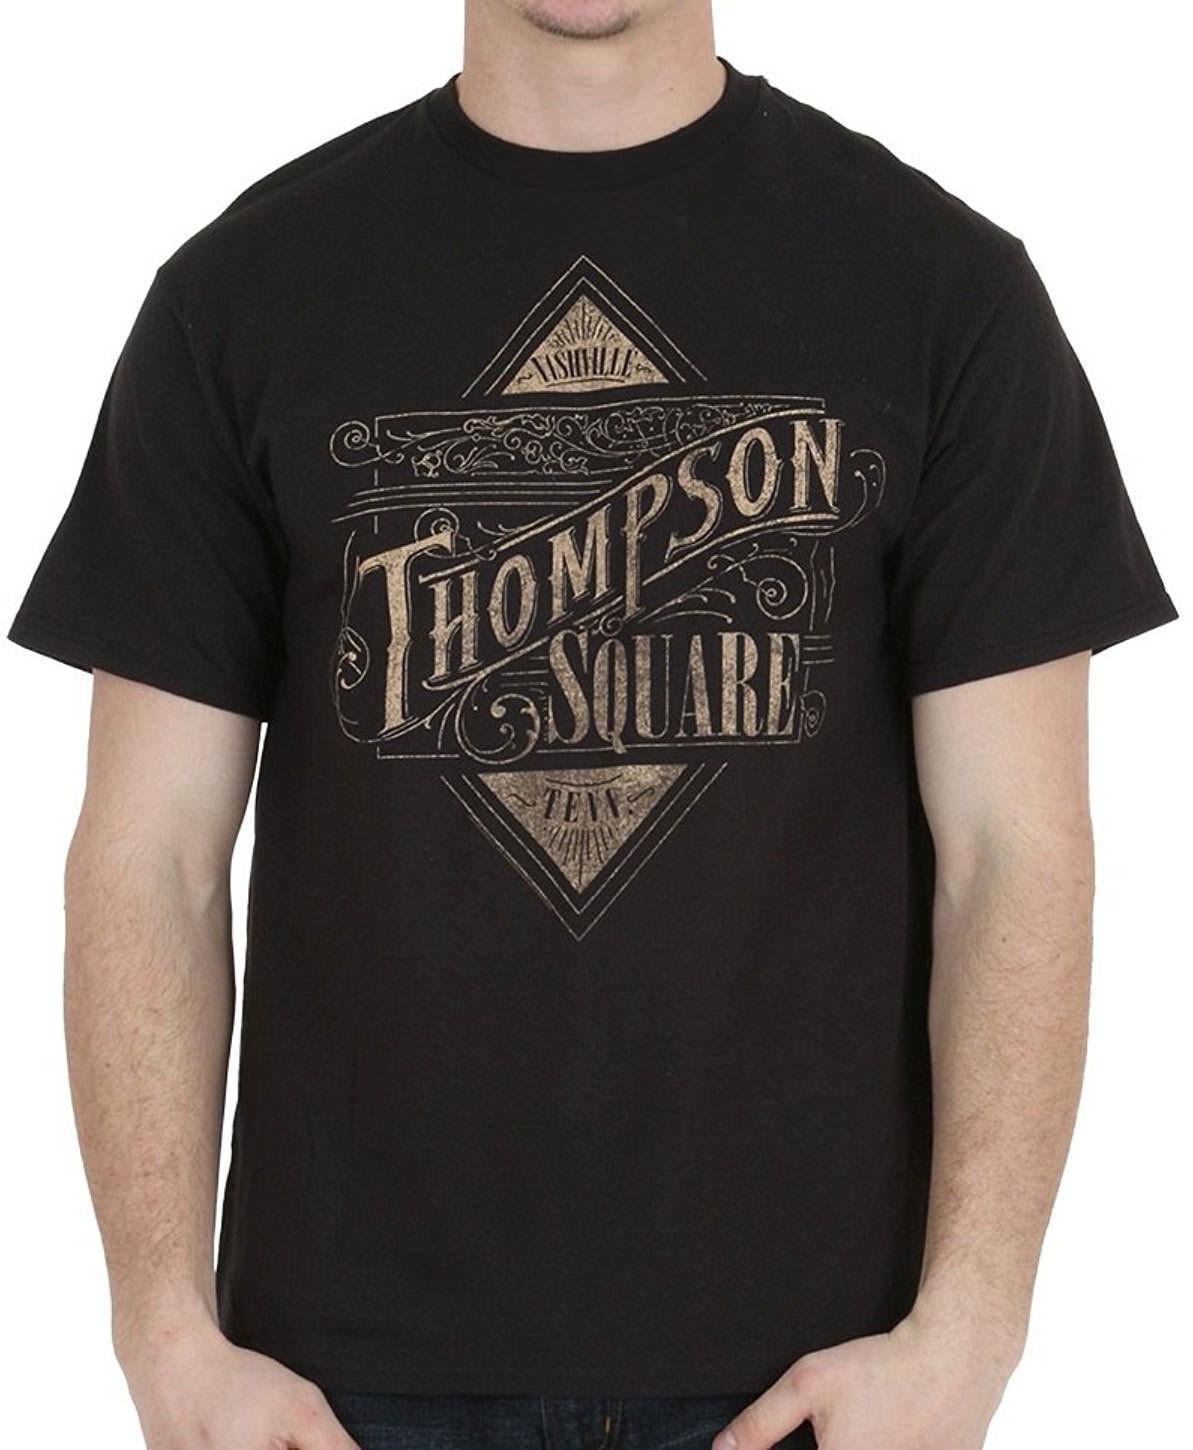 Thompson Square Logo - Thompson Square Logo Adult T Shirt Country Music, Shawna Thompson ...